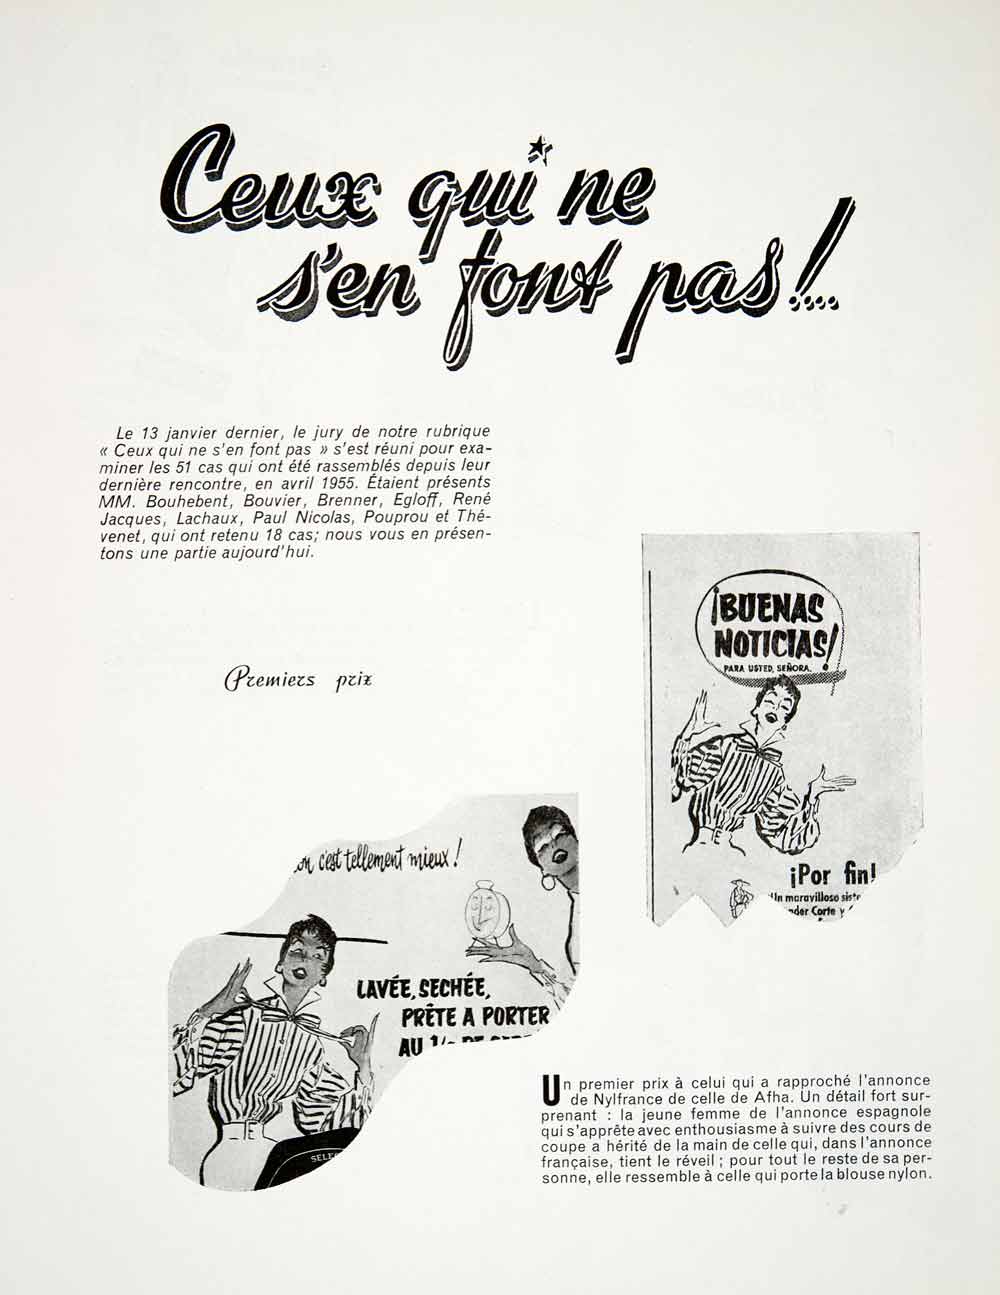 1956 Article Plagiarism Advertising Sintfilm Flomar Mavest Jell-O Bazoka VEN7